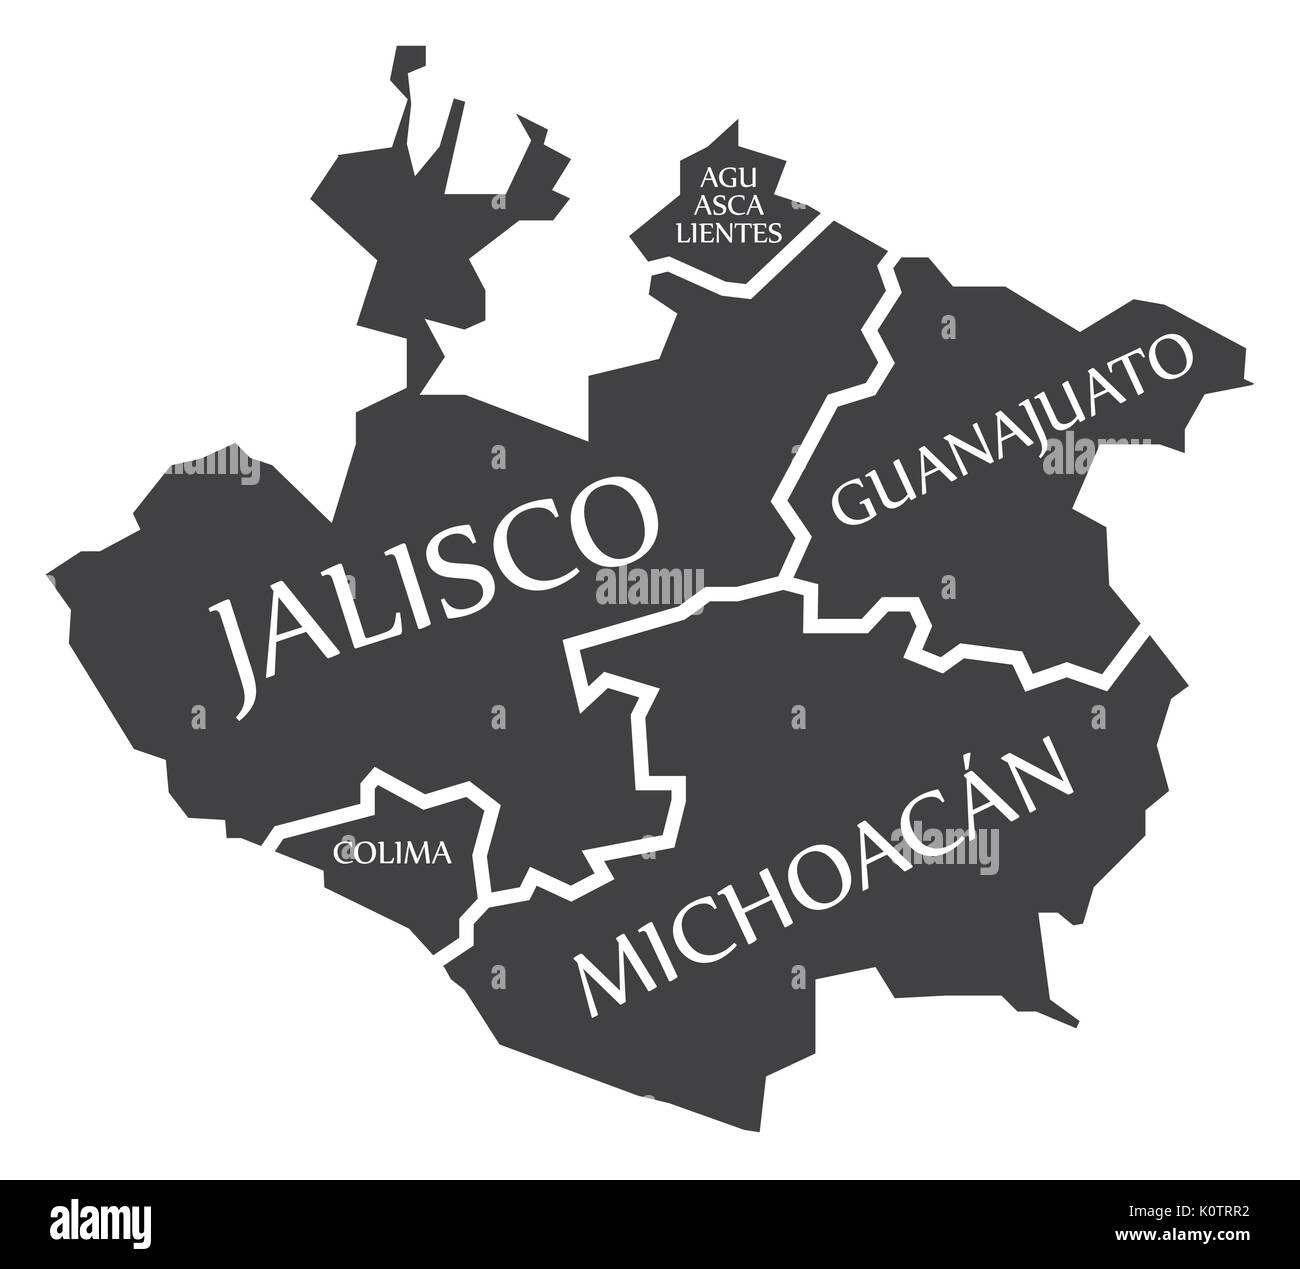 Aguascalientes - Jalisco - Colima - Guanajuato - Michoacan Map Mexico illustration Stock Vector